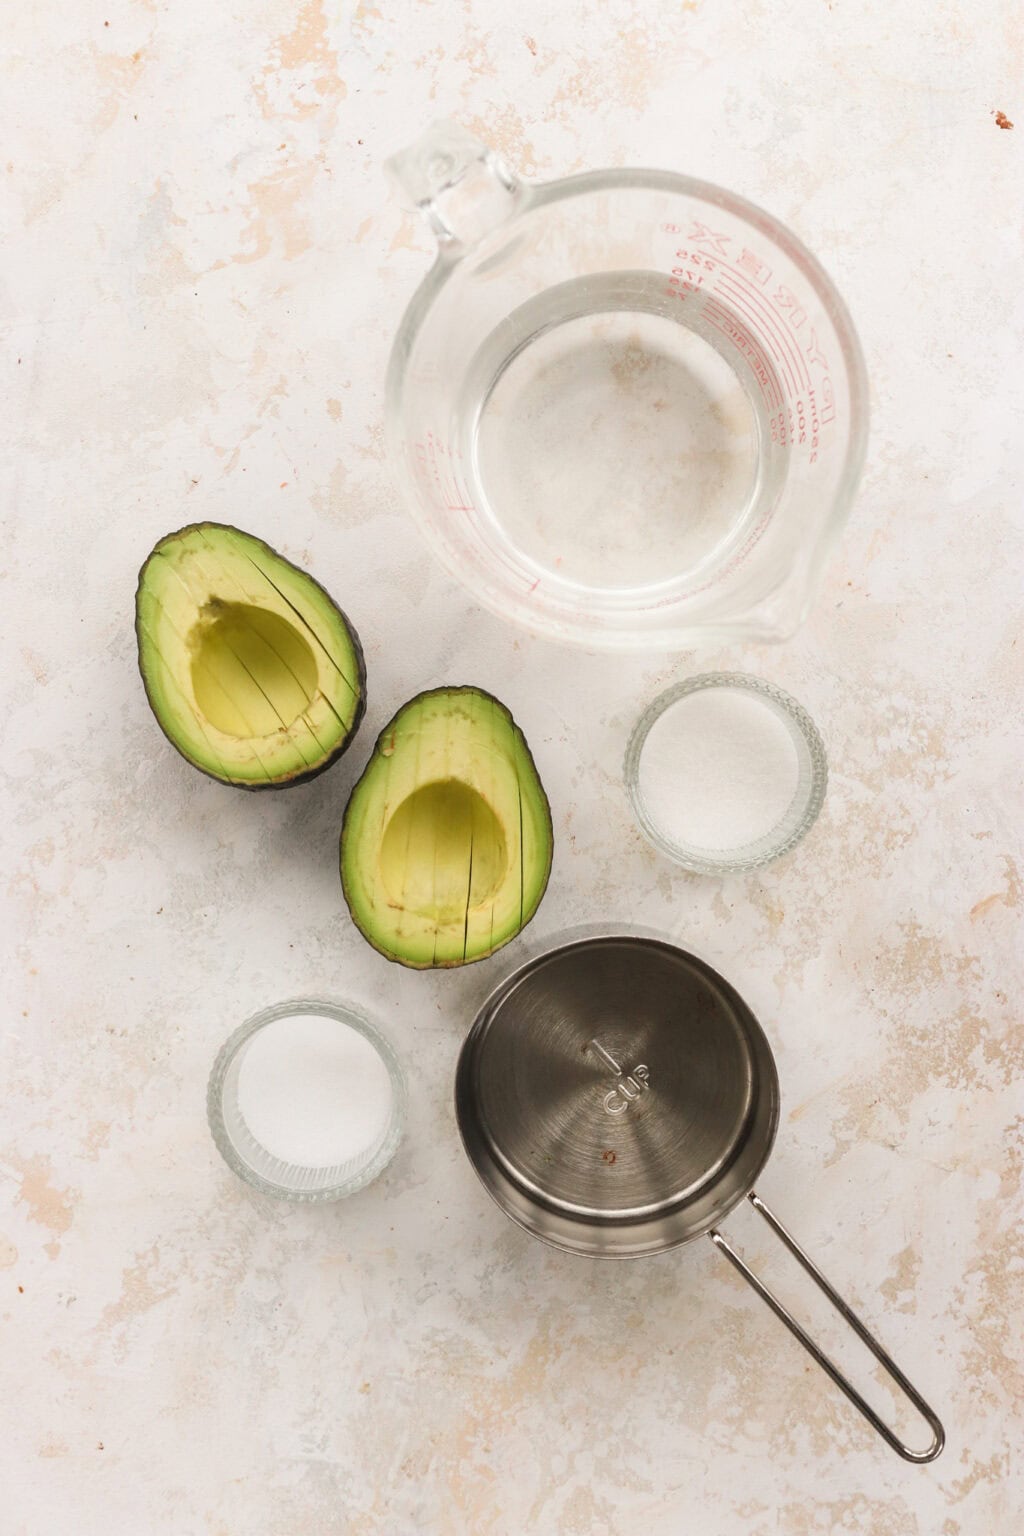 Ingredients for quick pickled avocados, including avocados, sugar, salt, vinegar, and hot water